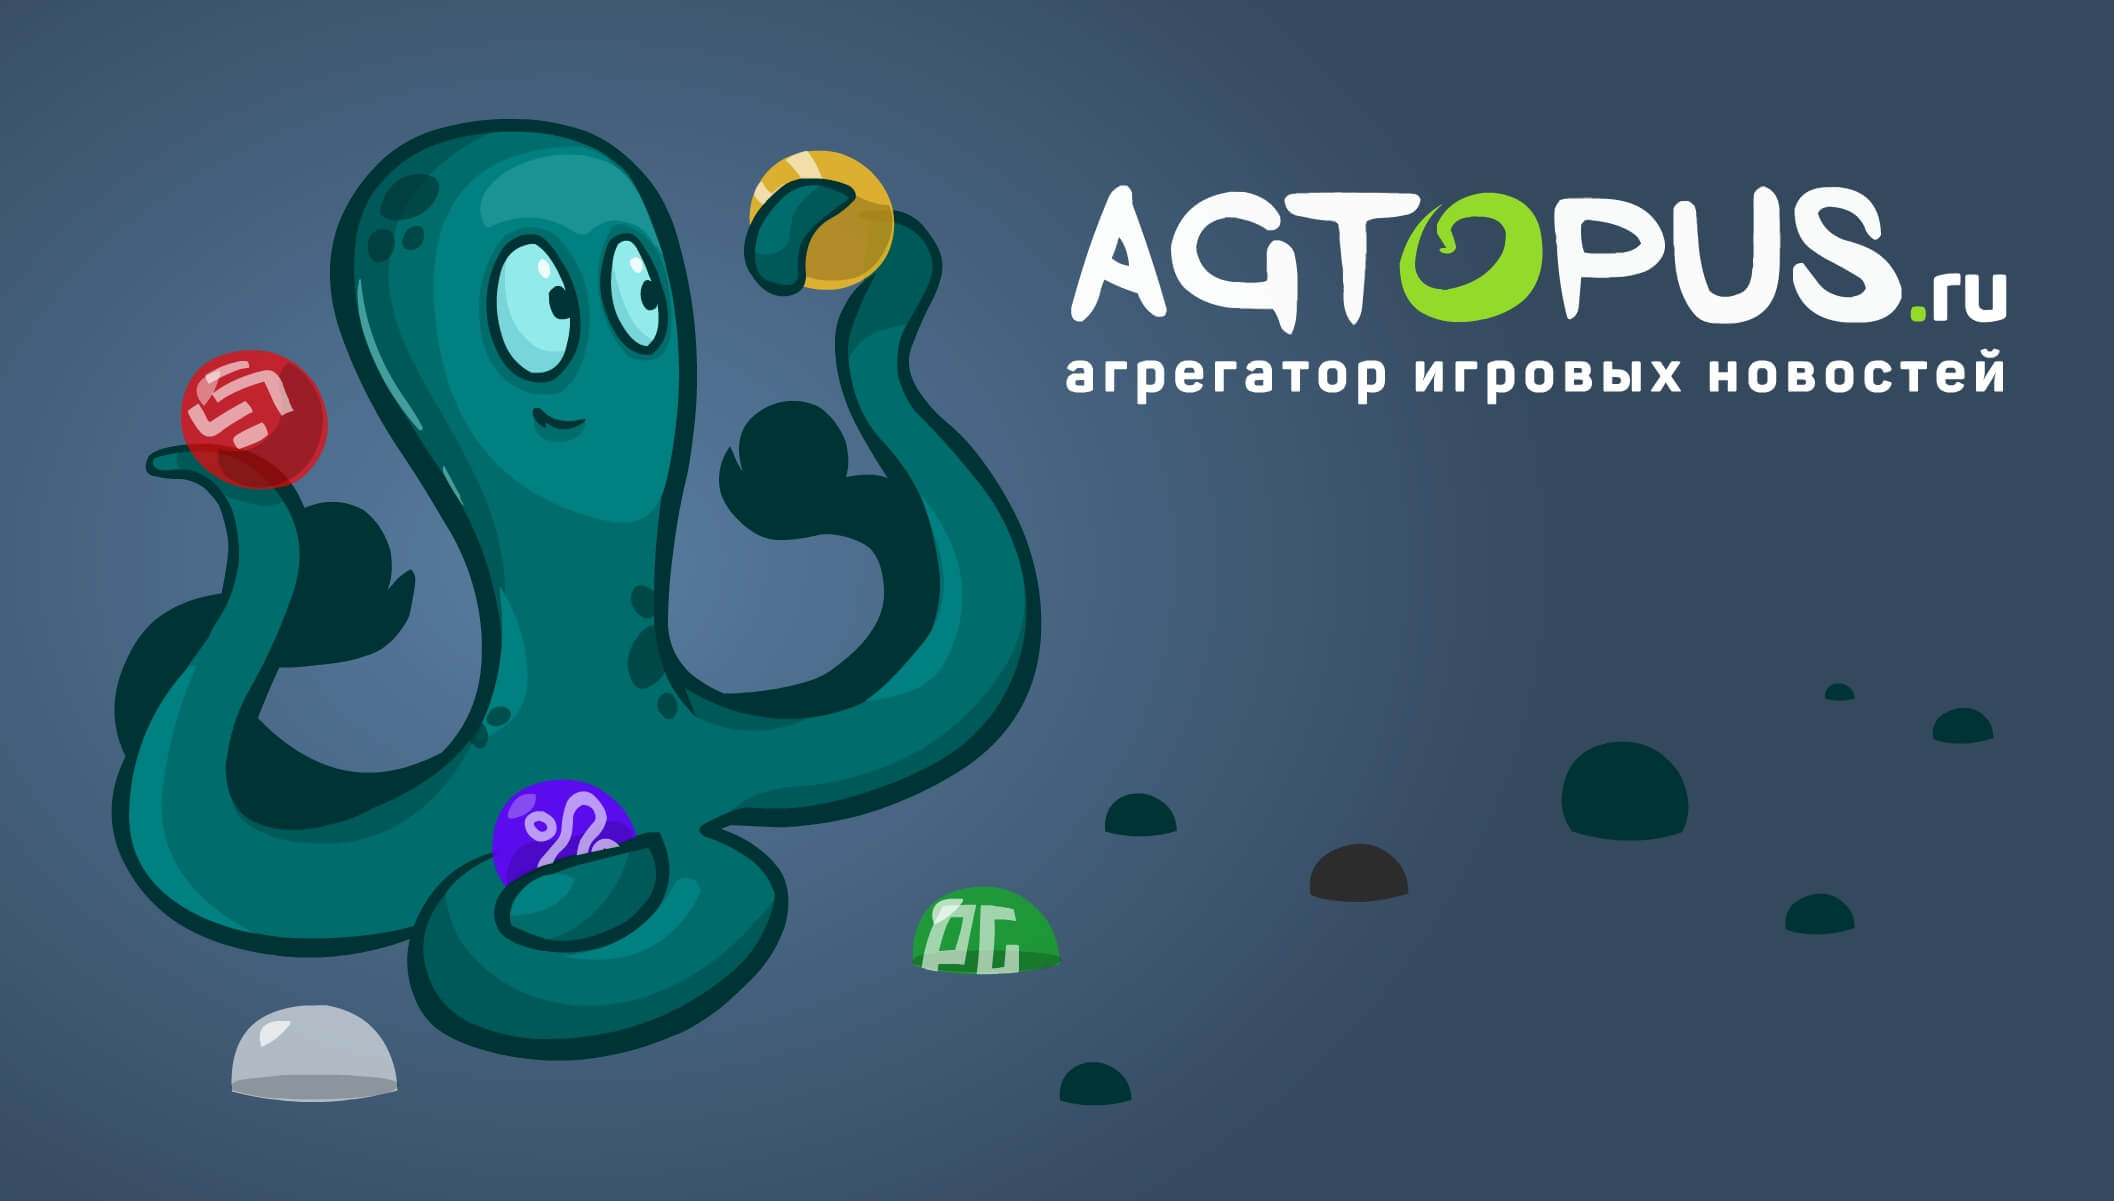 agtopus.ru